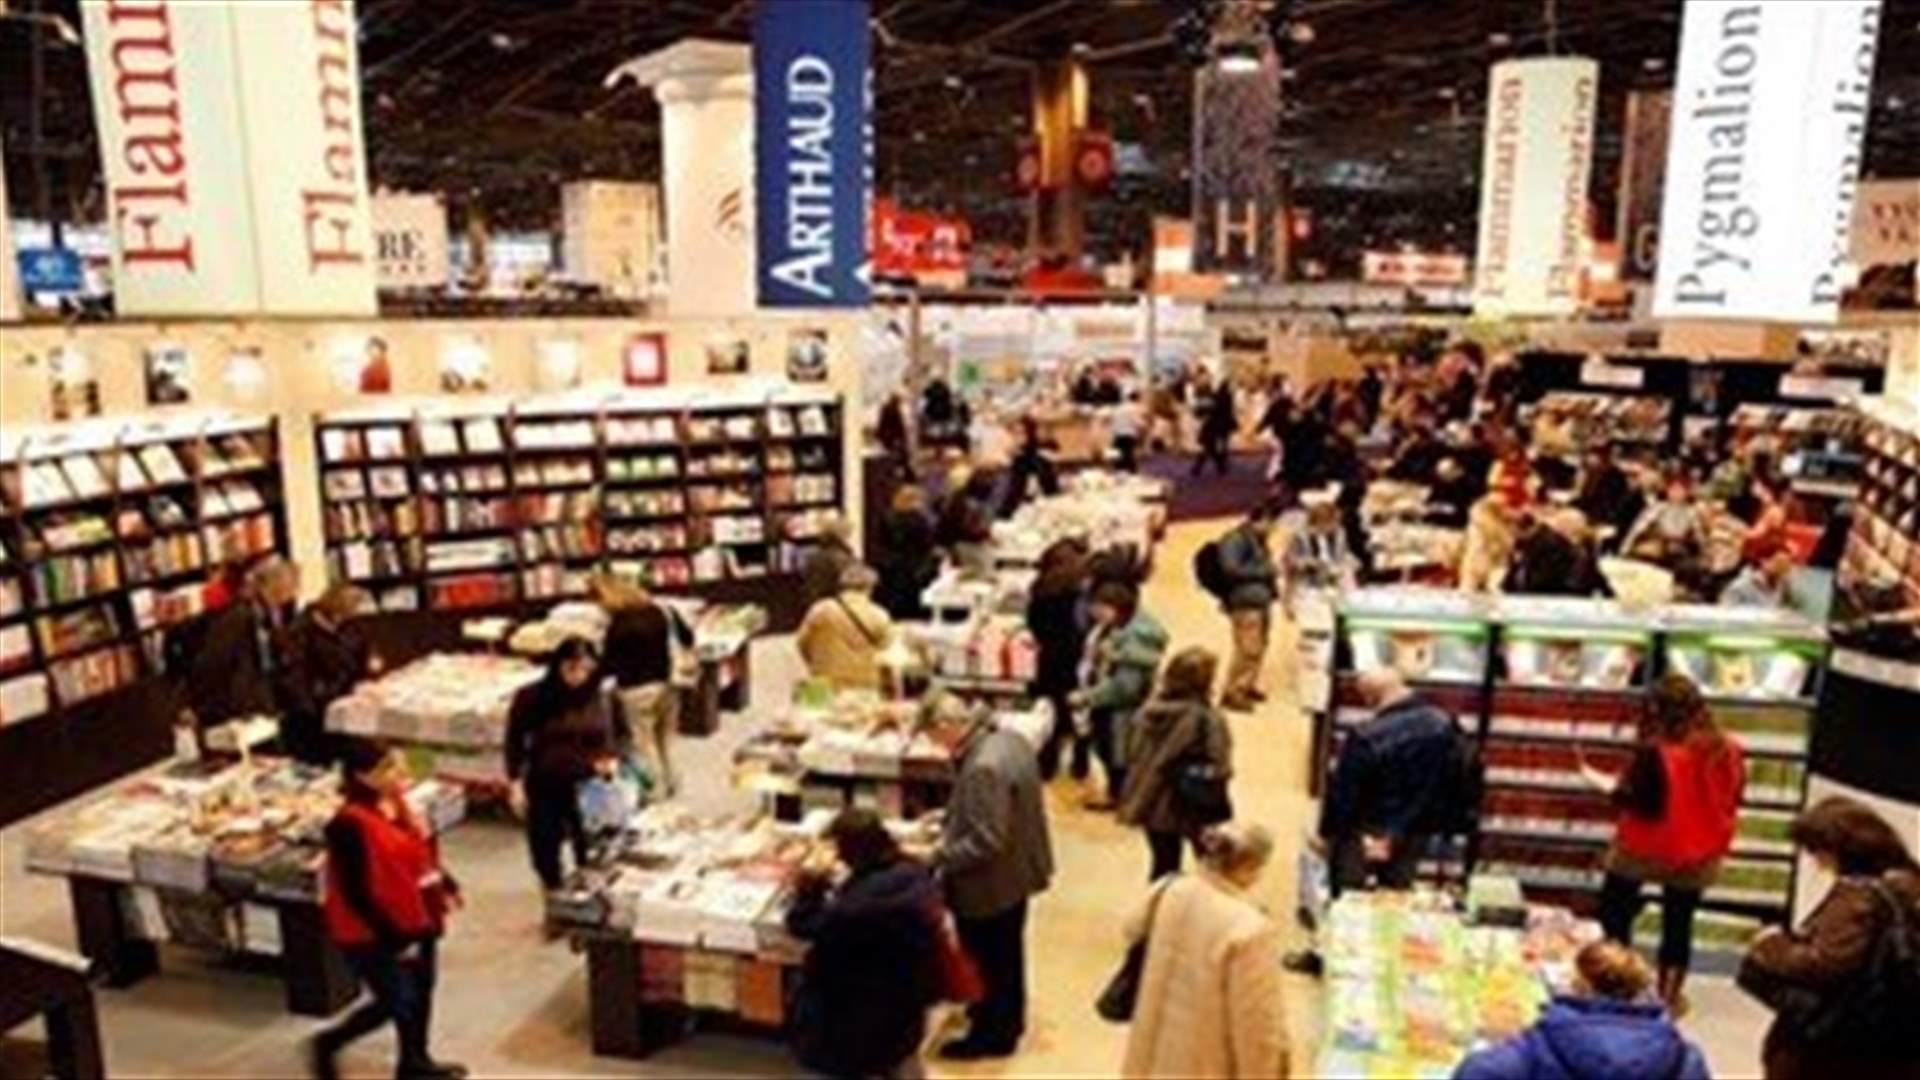 Paris book fair cancelled due to coronavirus outbreak